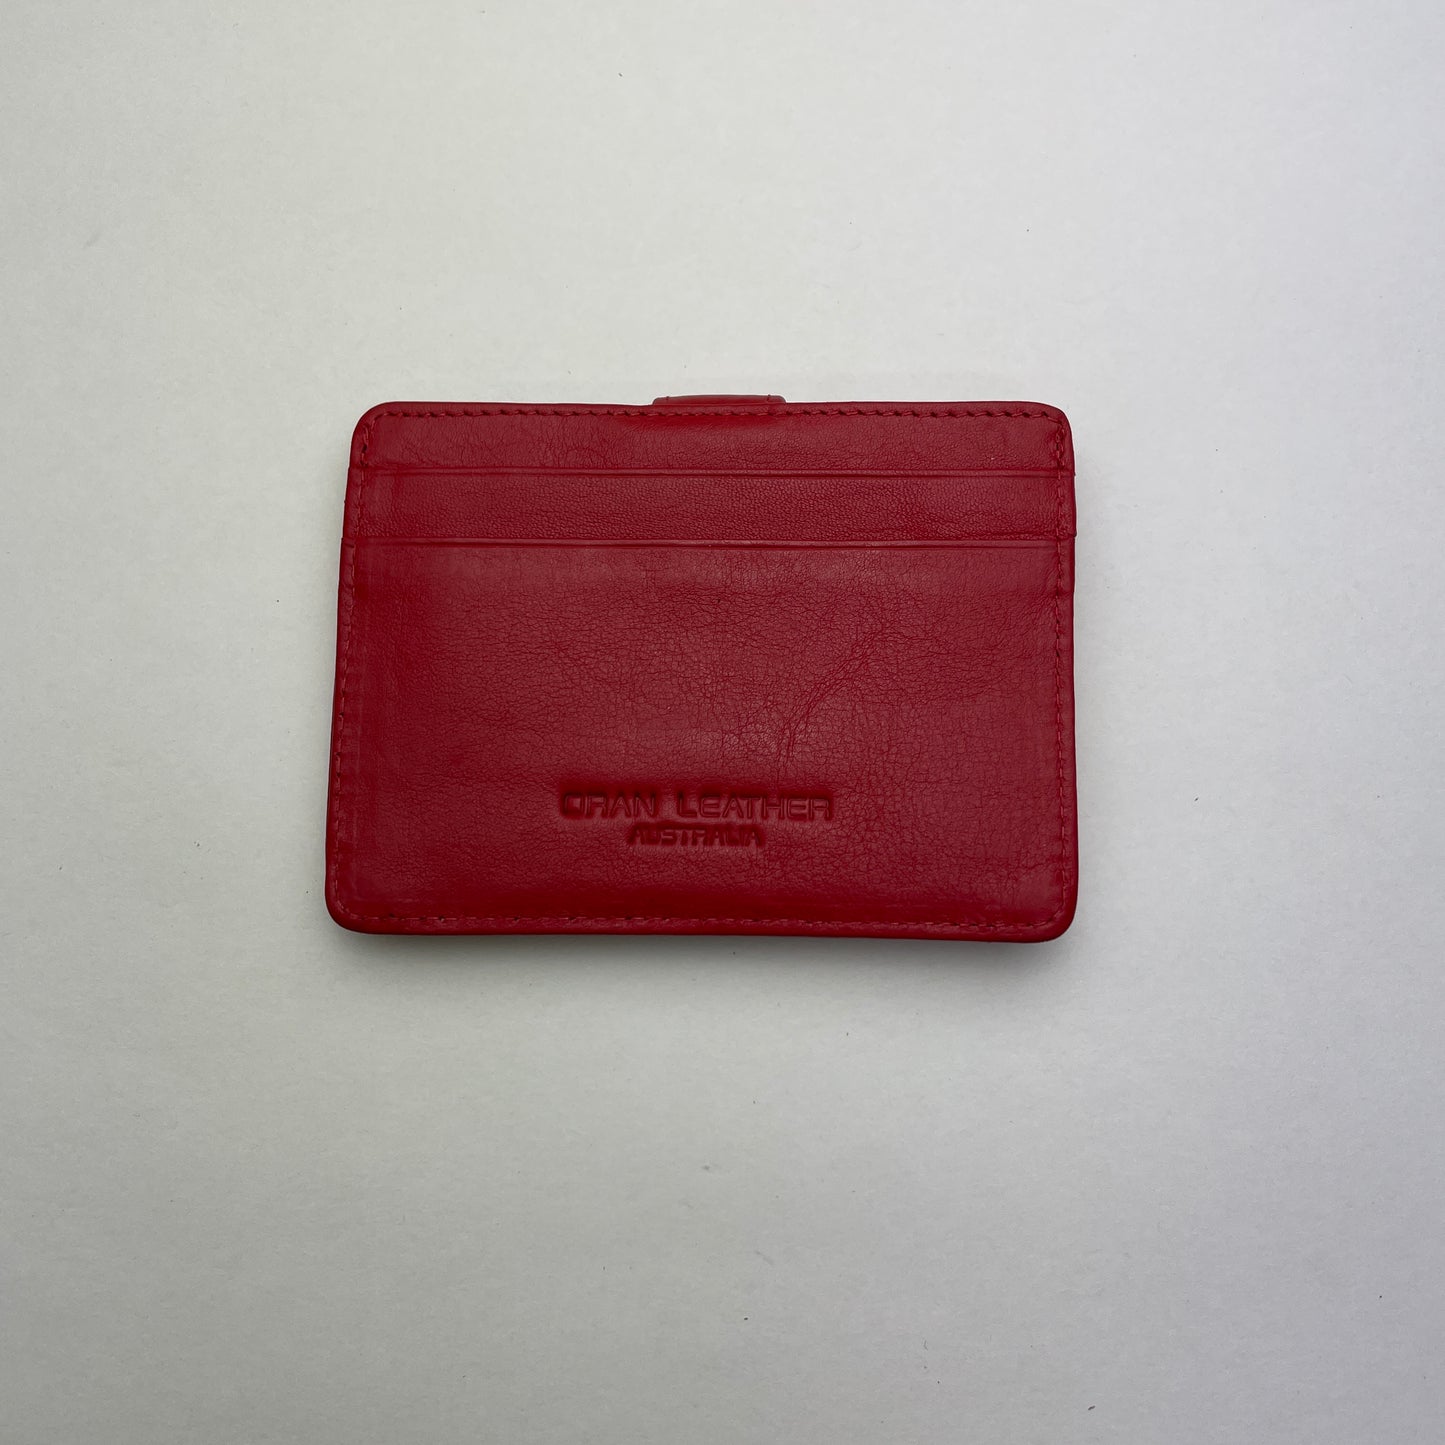 ORAN LEATHER SASHA RFID CARD HOLDER RED